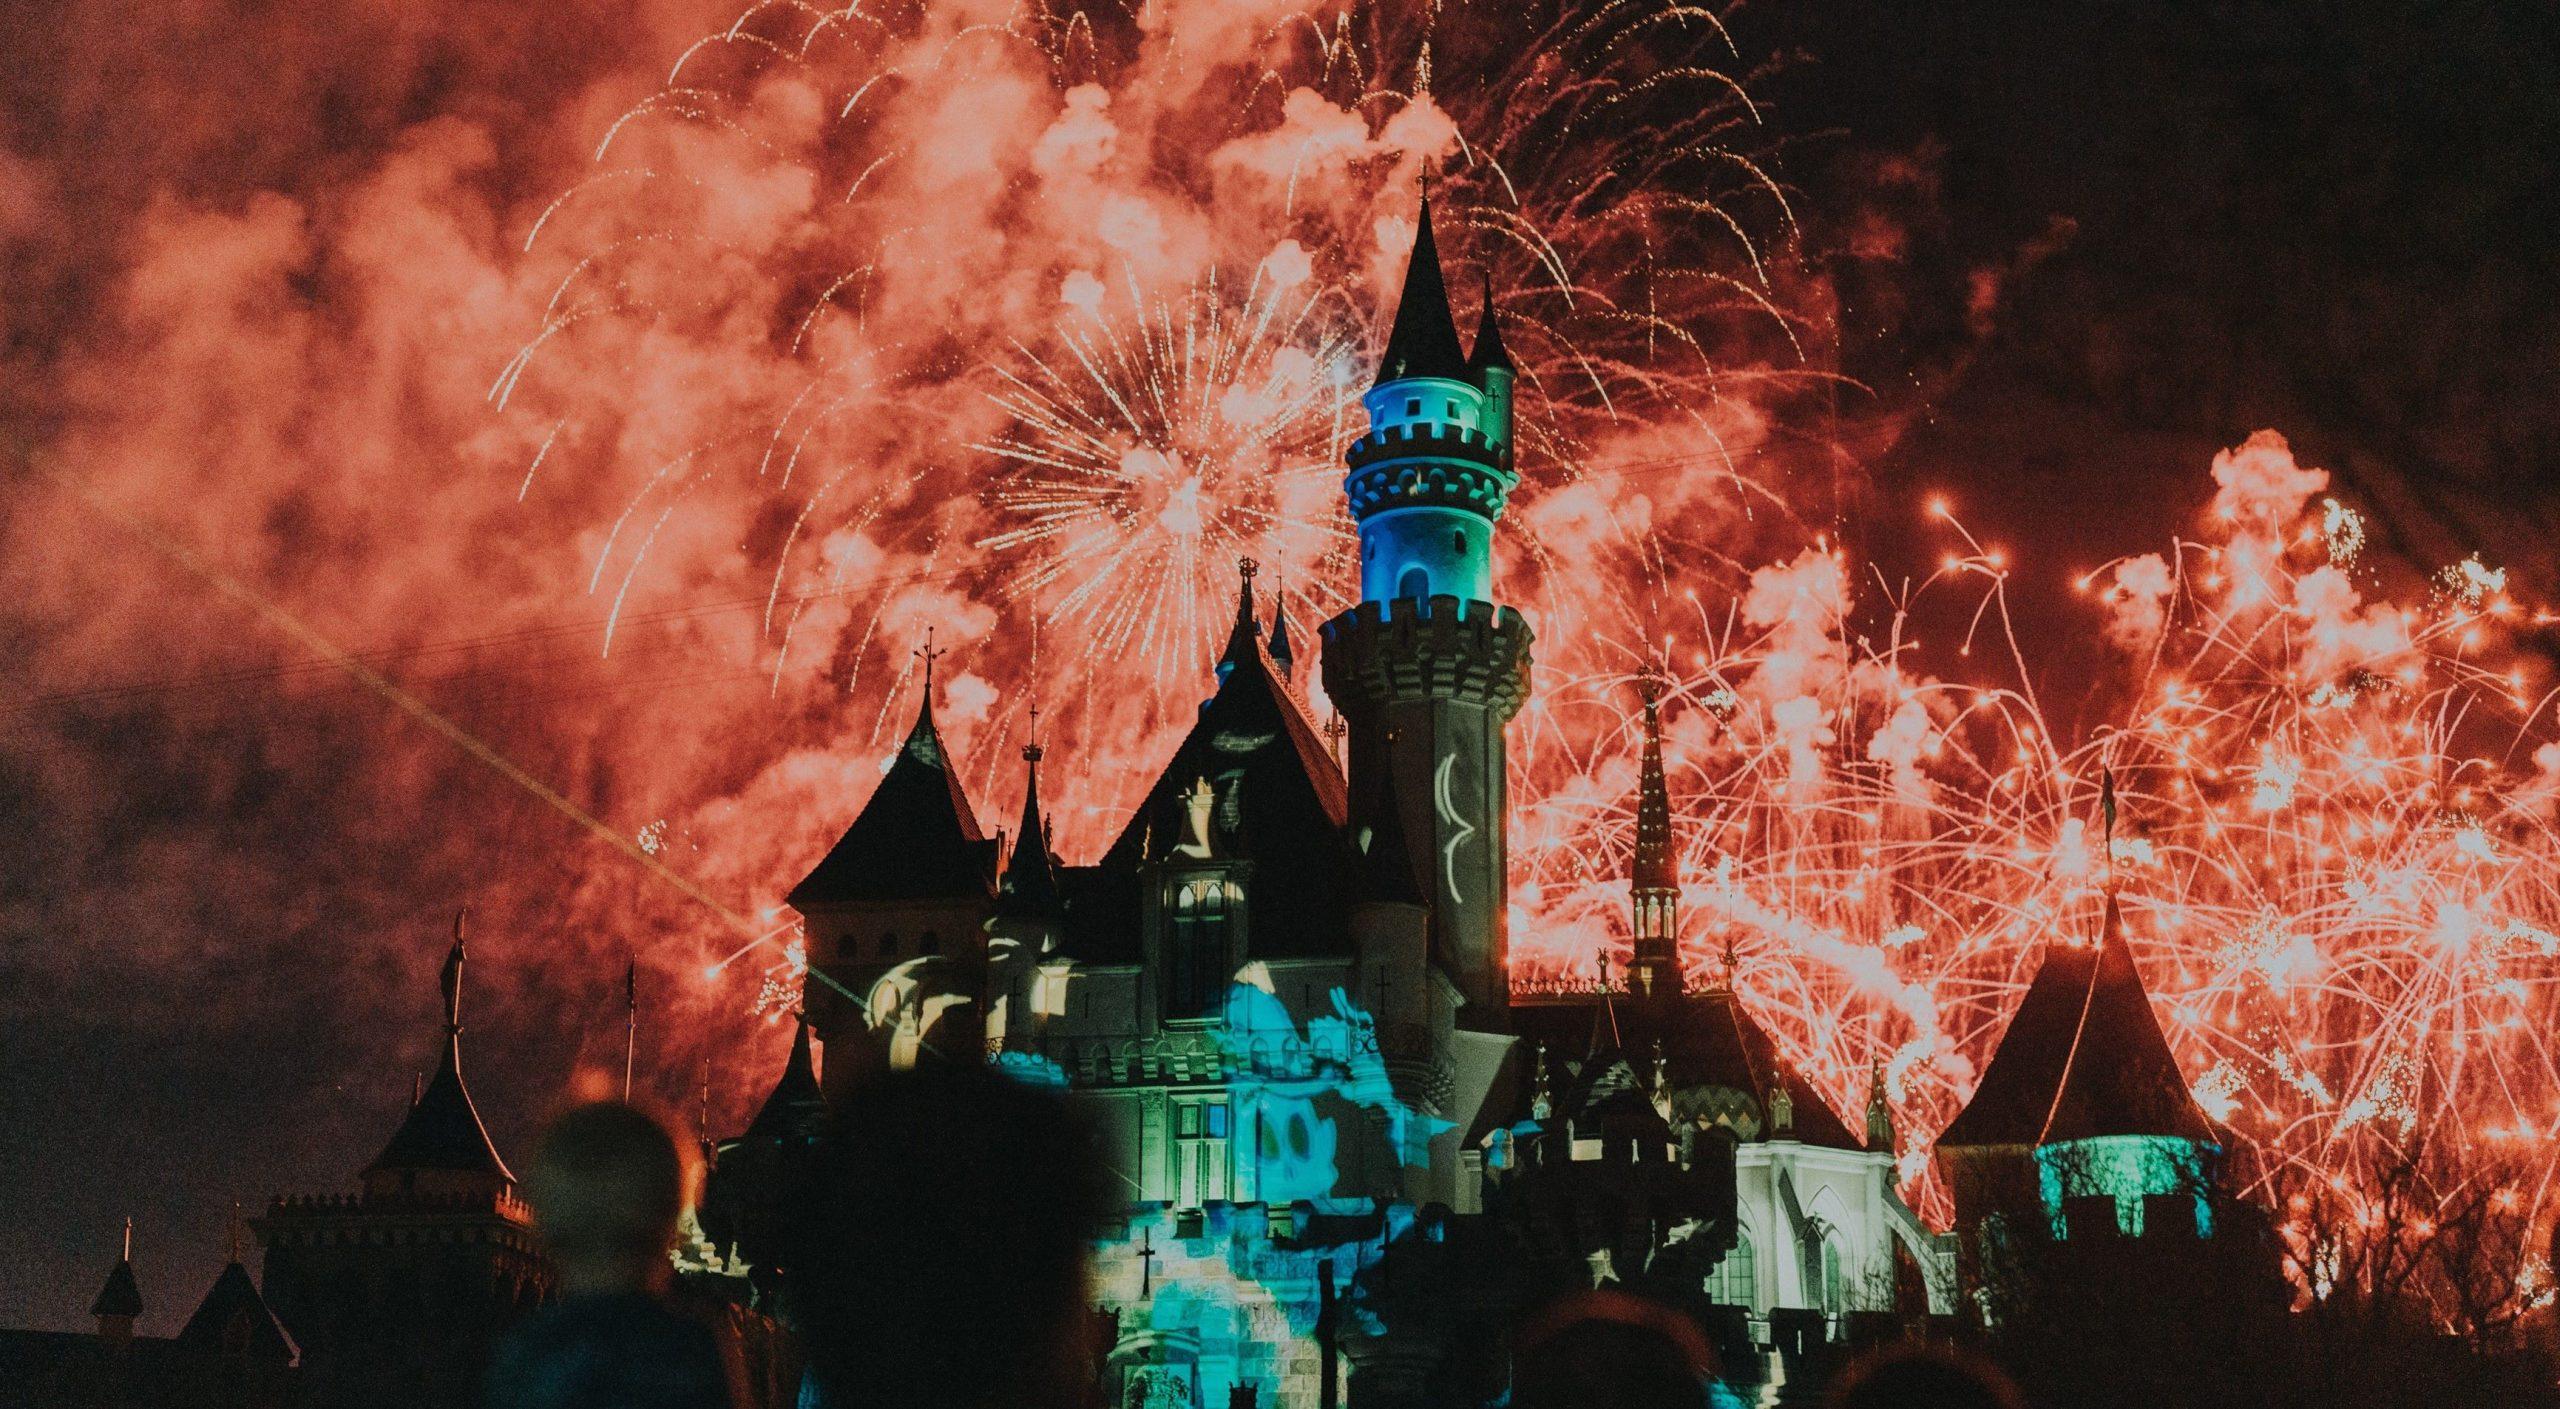 Fireworks display over castle at Disneyland Resort in Anaheim.